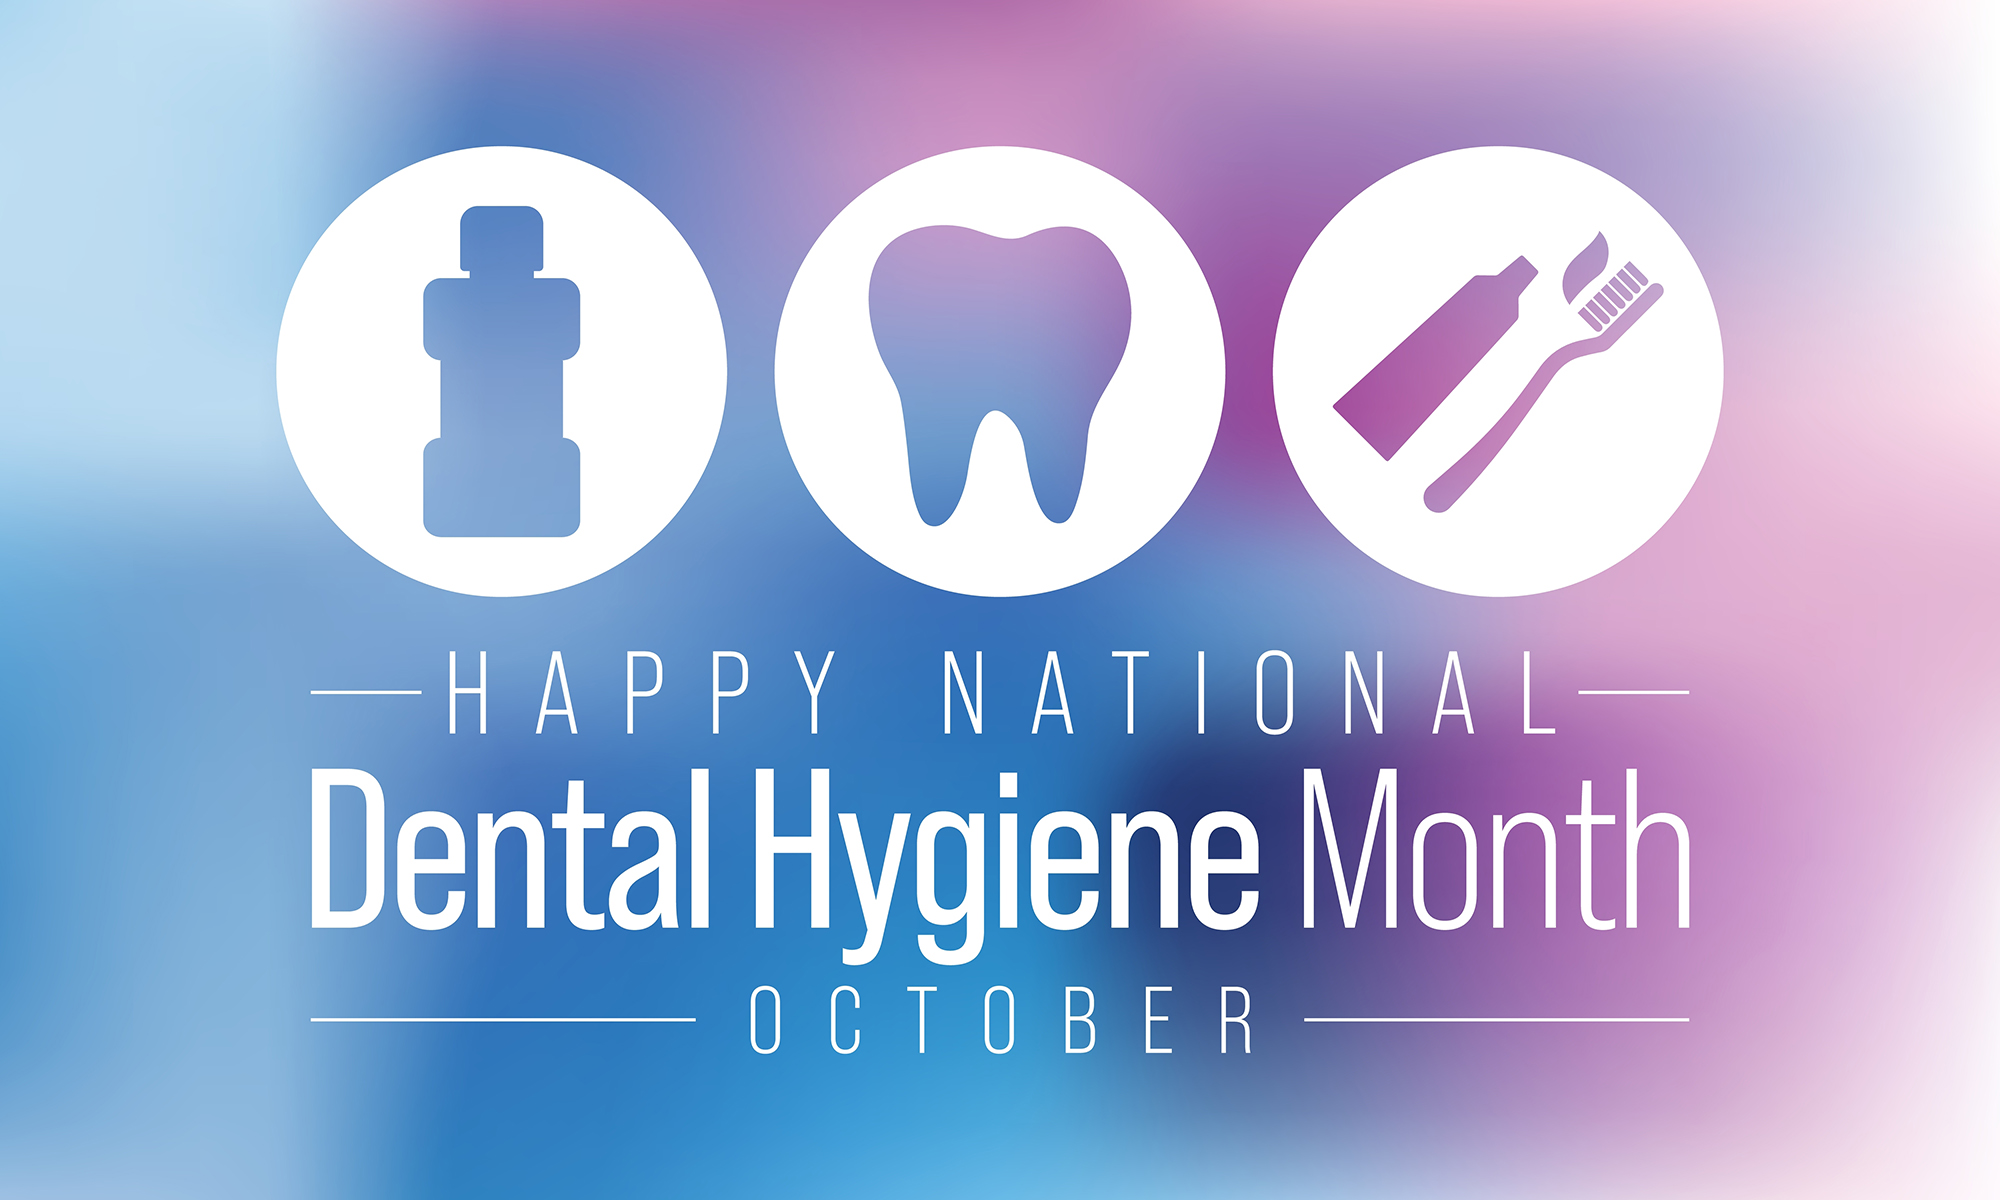 October is National Dental Hygiene Month Virginia Department of Health